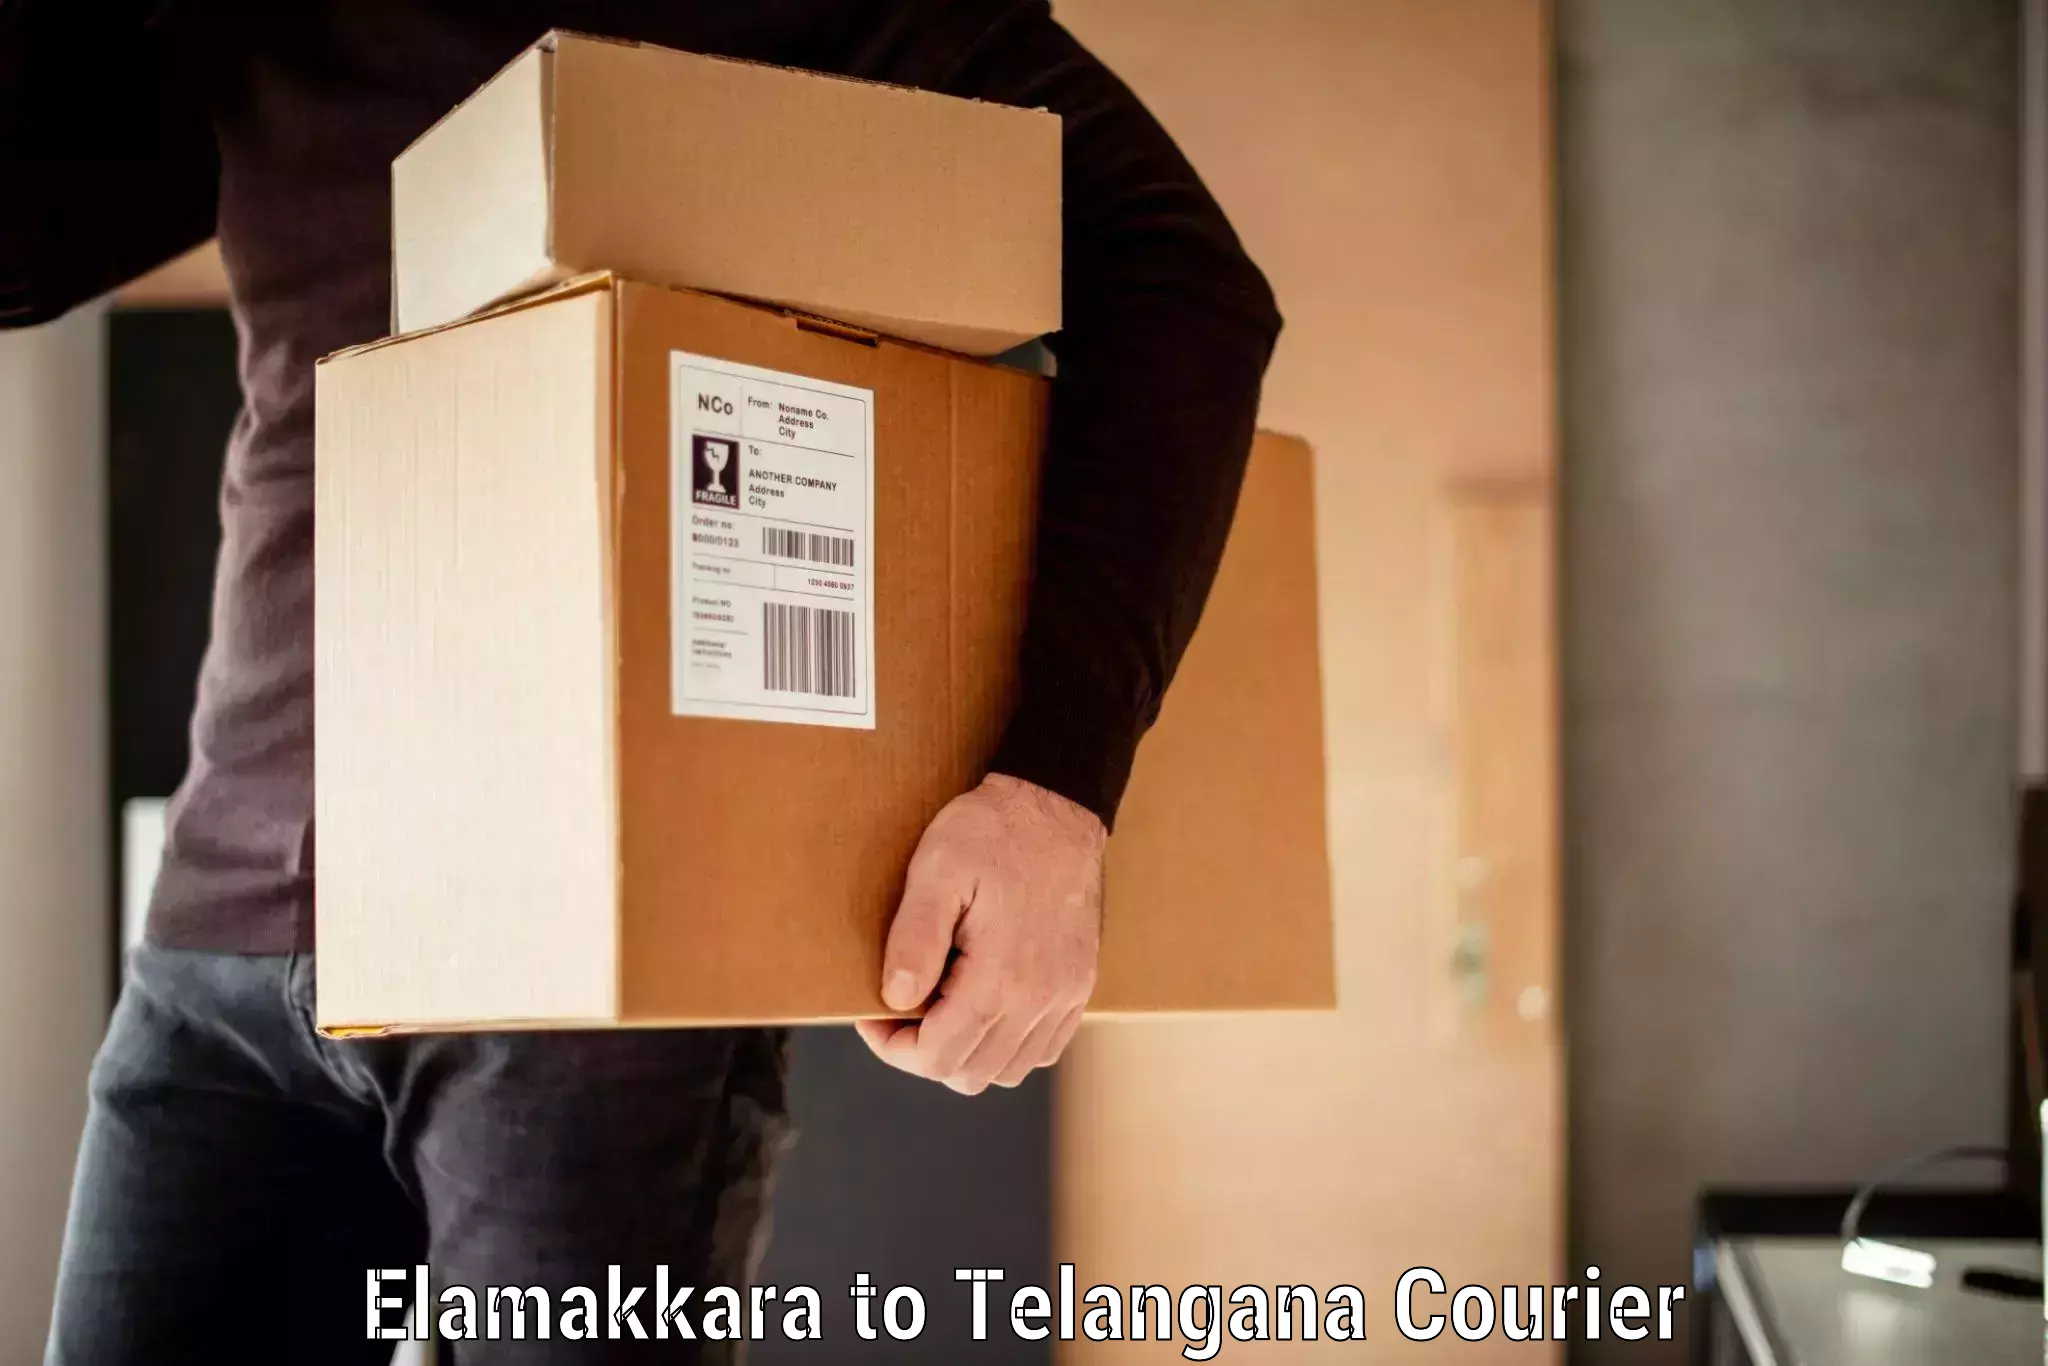 Baggage transport network Elamakkara to Makthal